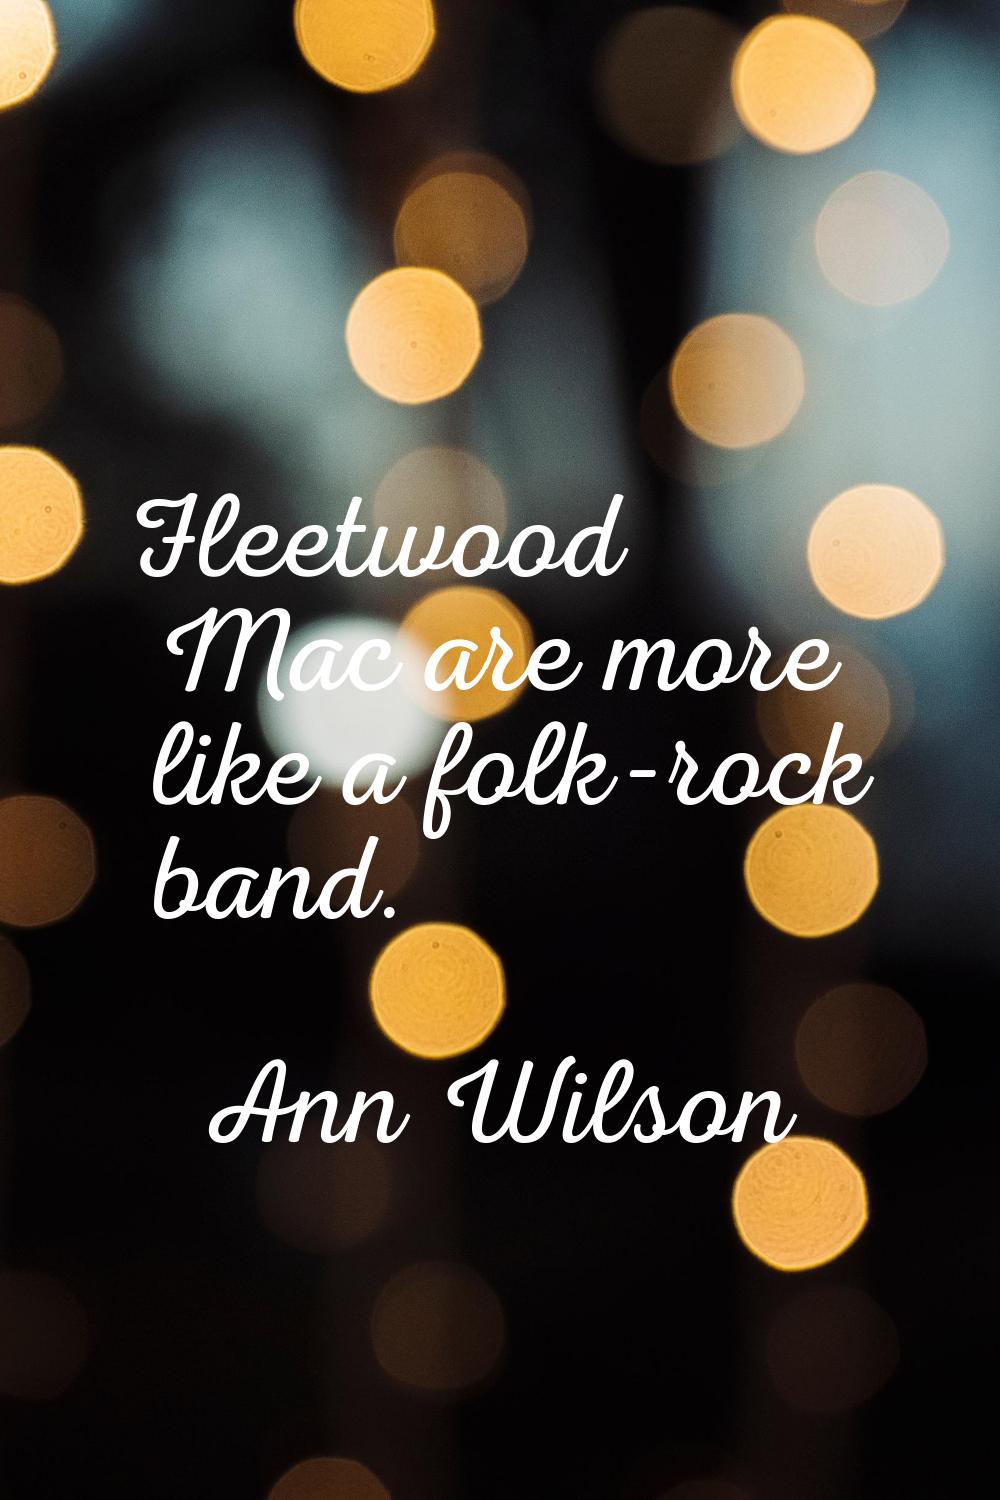 Fleetwood Mac are more like a folk-rock band.